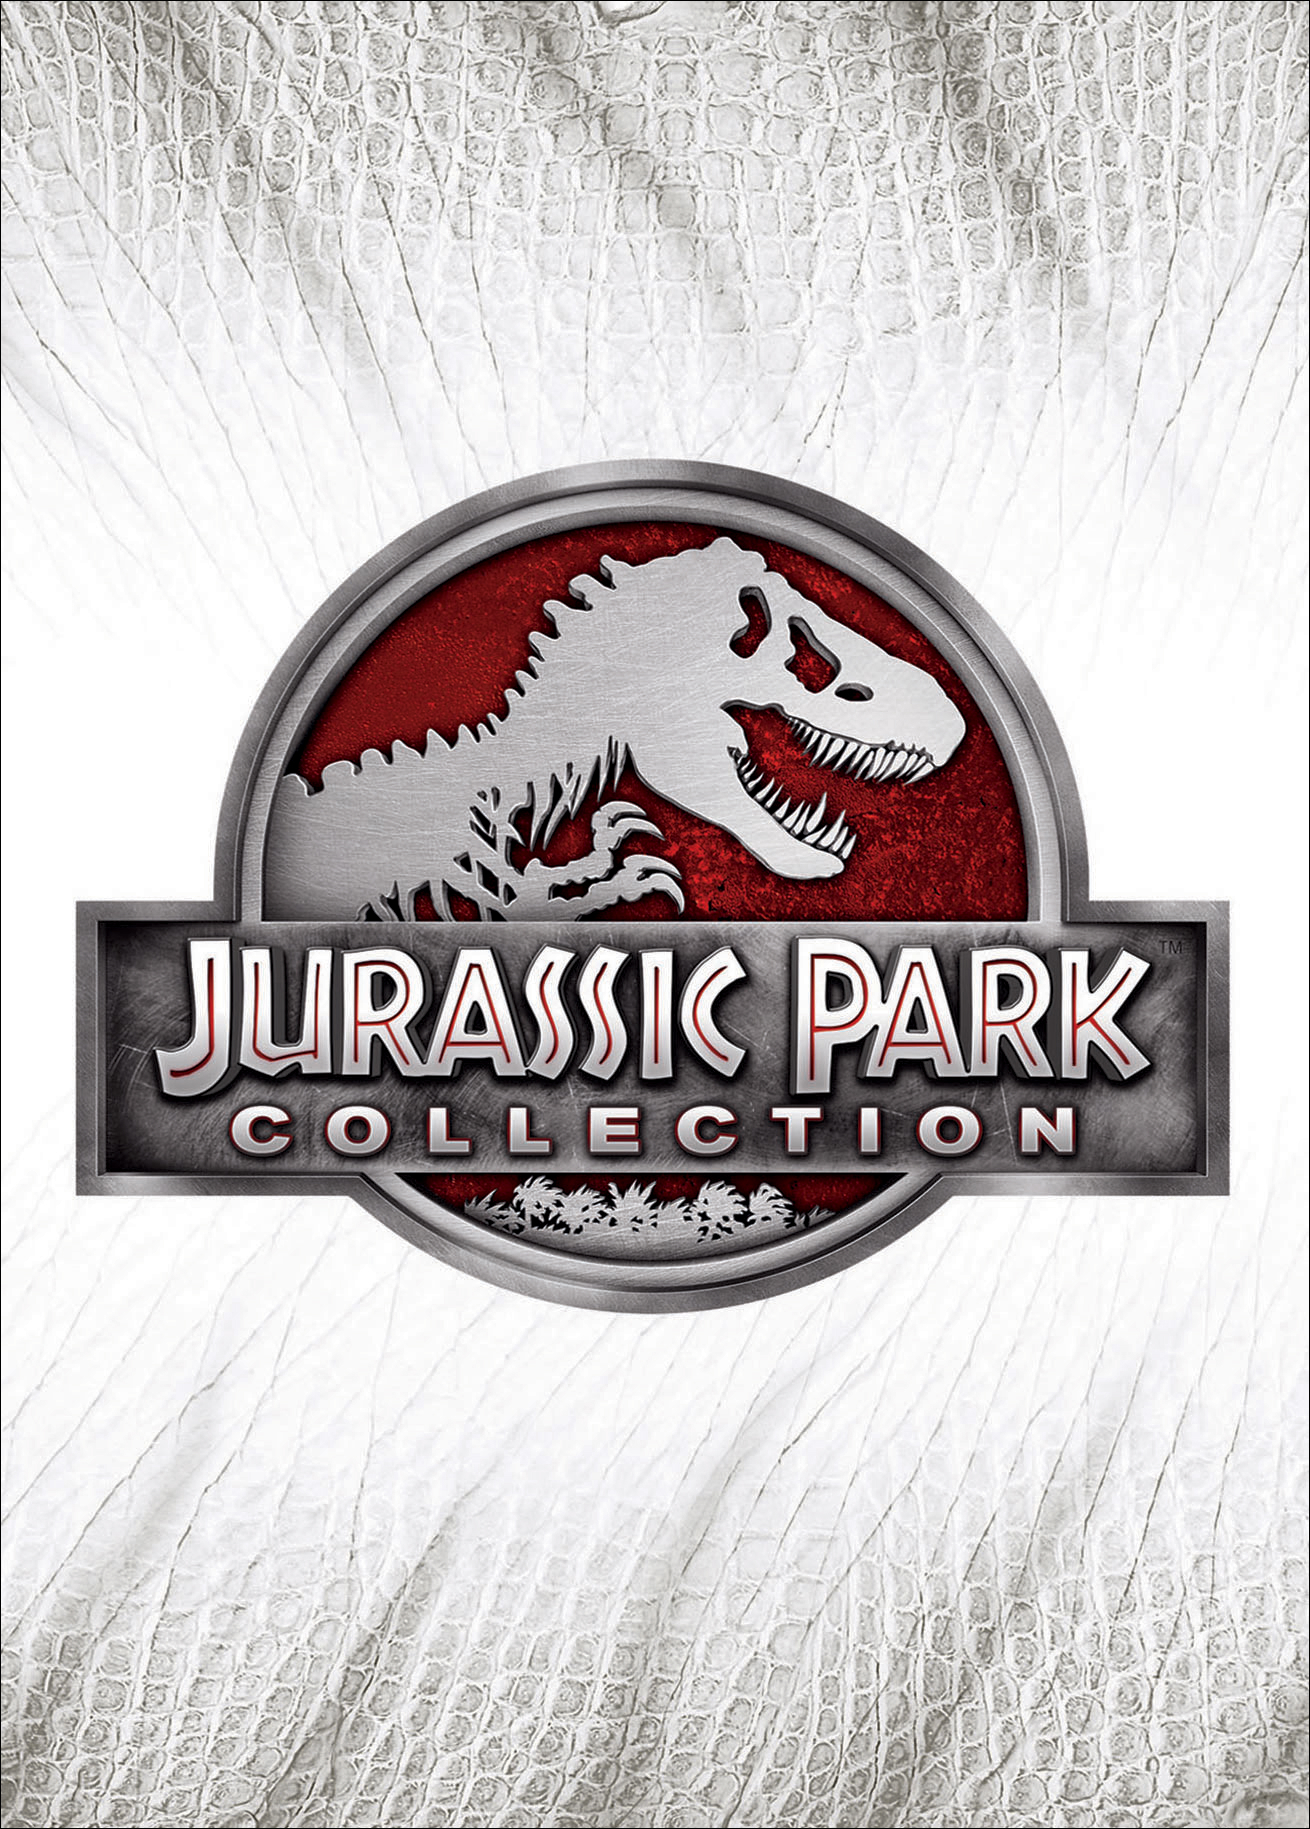 Jurassic Park Collection (DVD Set) - DVD [ 2015 ]  - Adventure Movies On DVD - Movies On GRUV